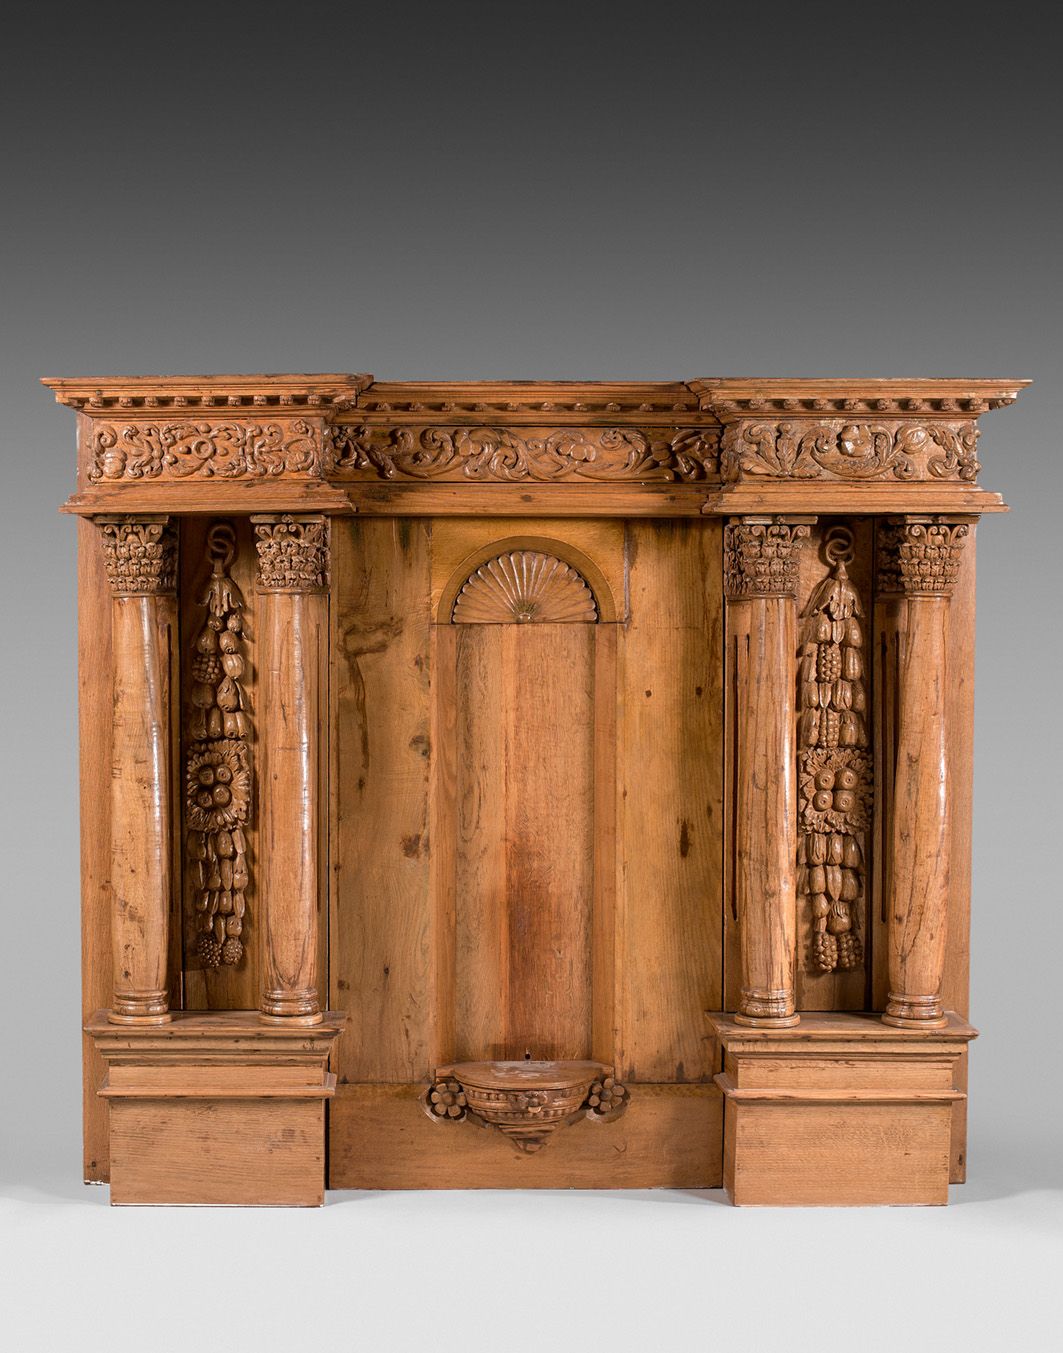 Null 模制和雕刻的橡木祭坛顶部，有四根带复合式柱头的柱子，凹槽壁柱，水果和鲜花瀑布。

17世纪。

高度172 - 宽度213 - 深度35厘米

零件重&hellip;